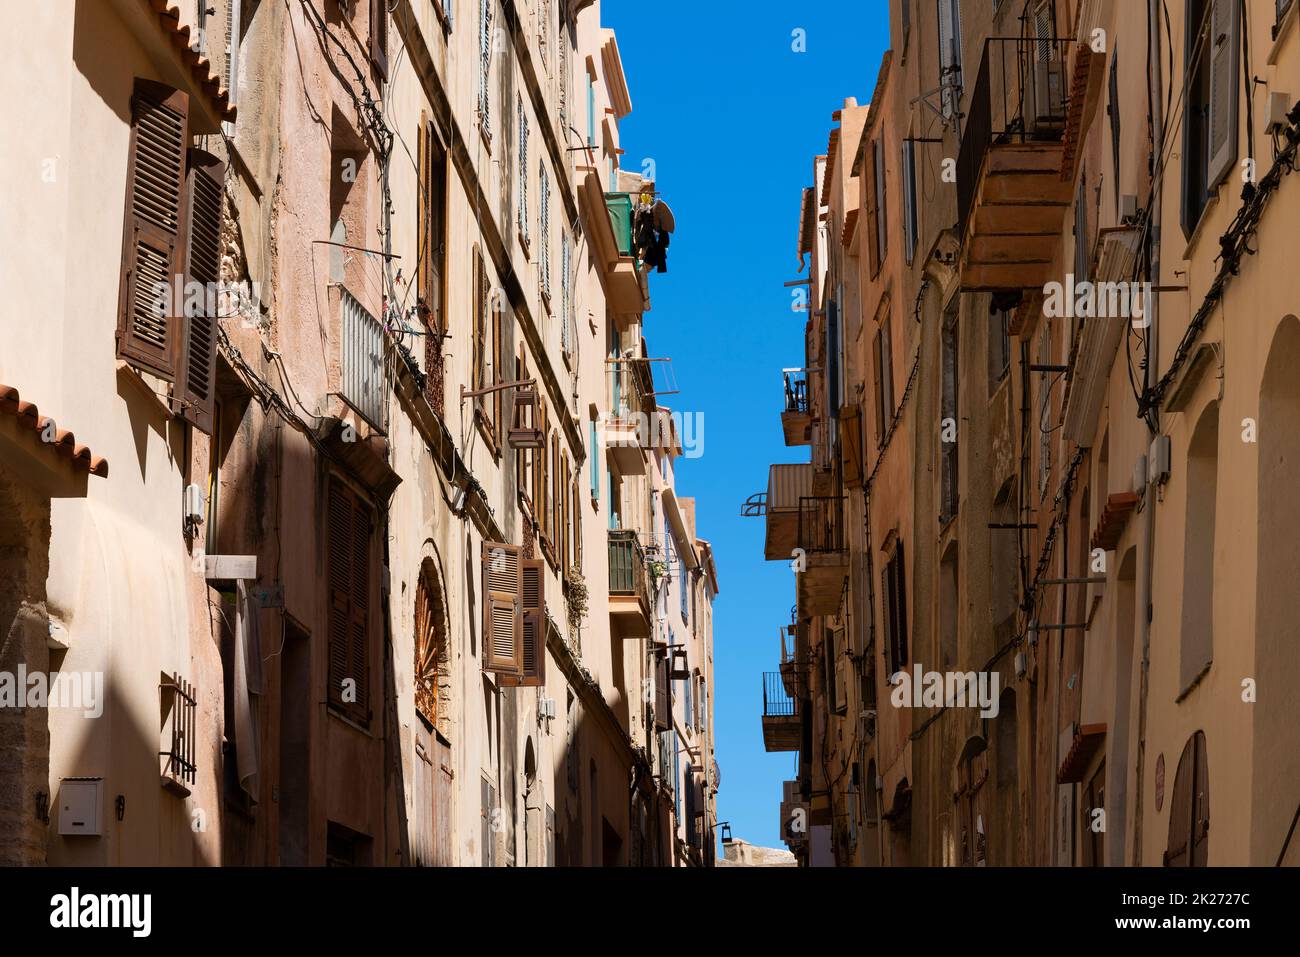 Typical street of Bonifacio, Corsica, France, Europe Stock Photo